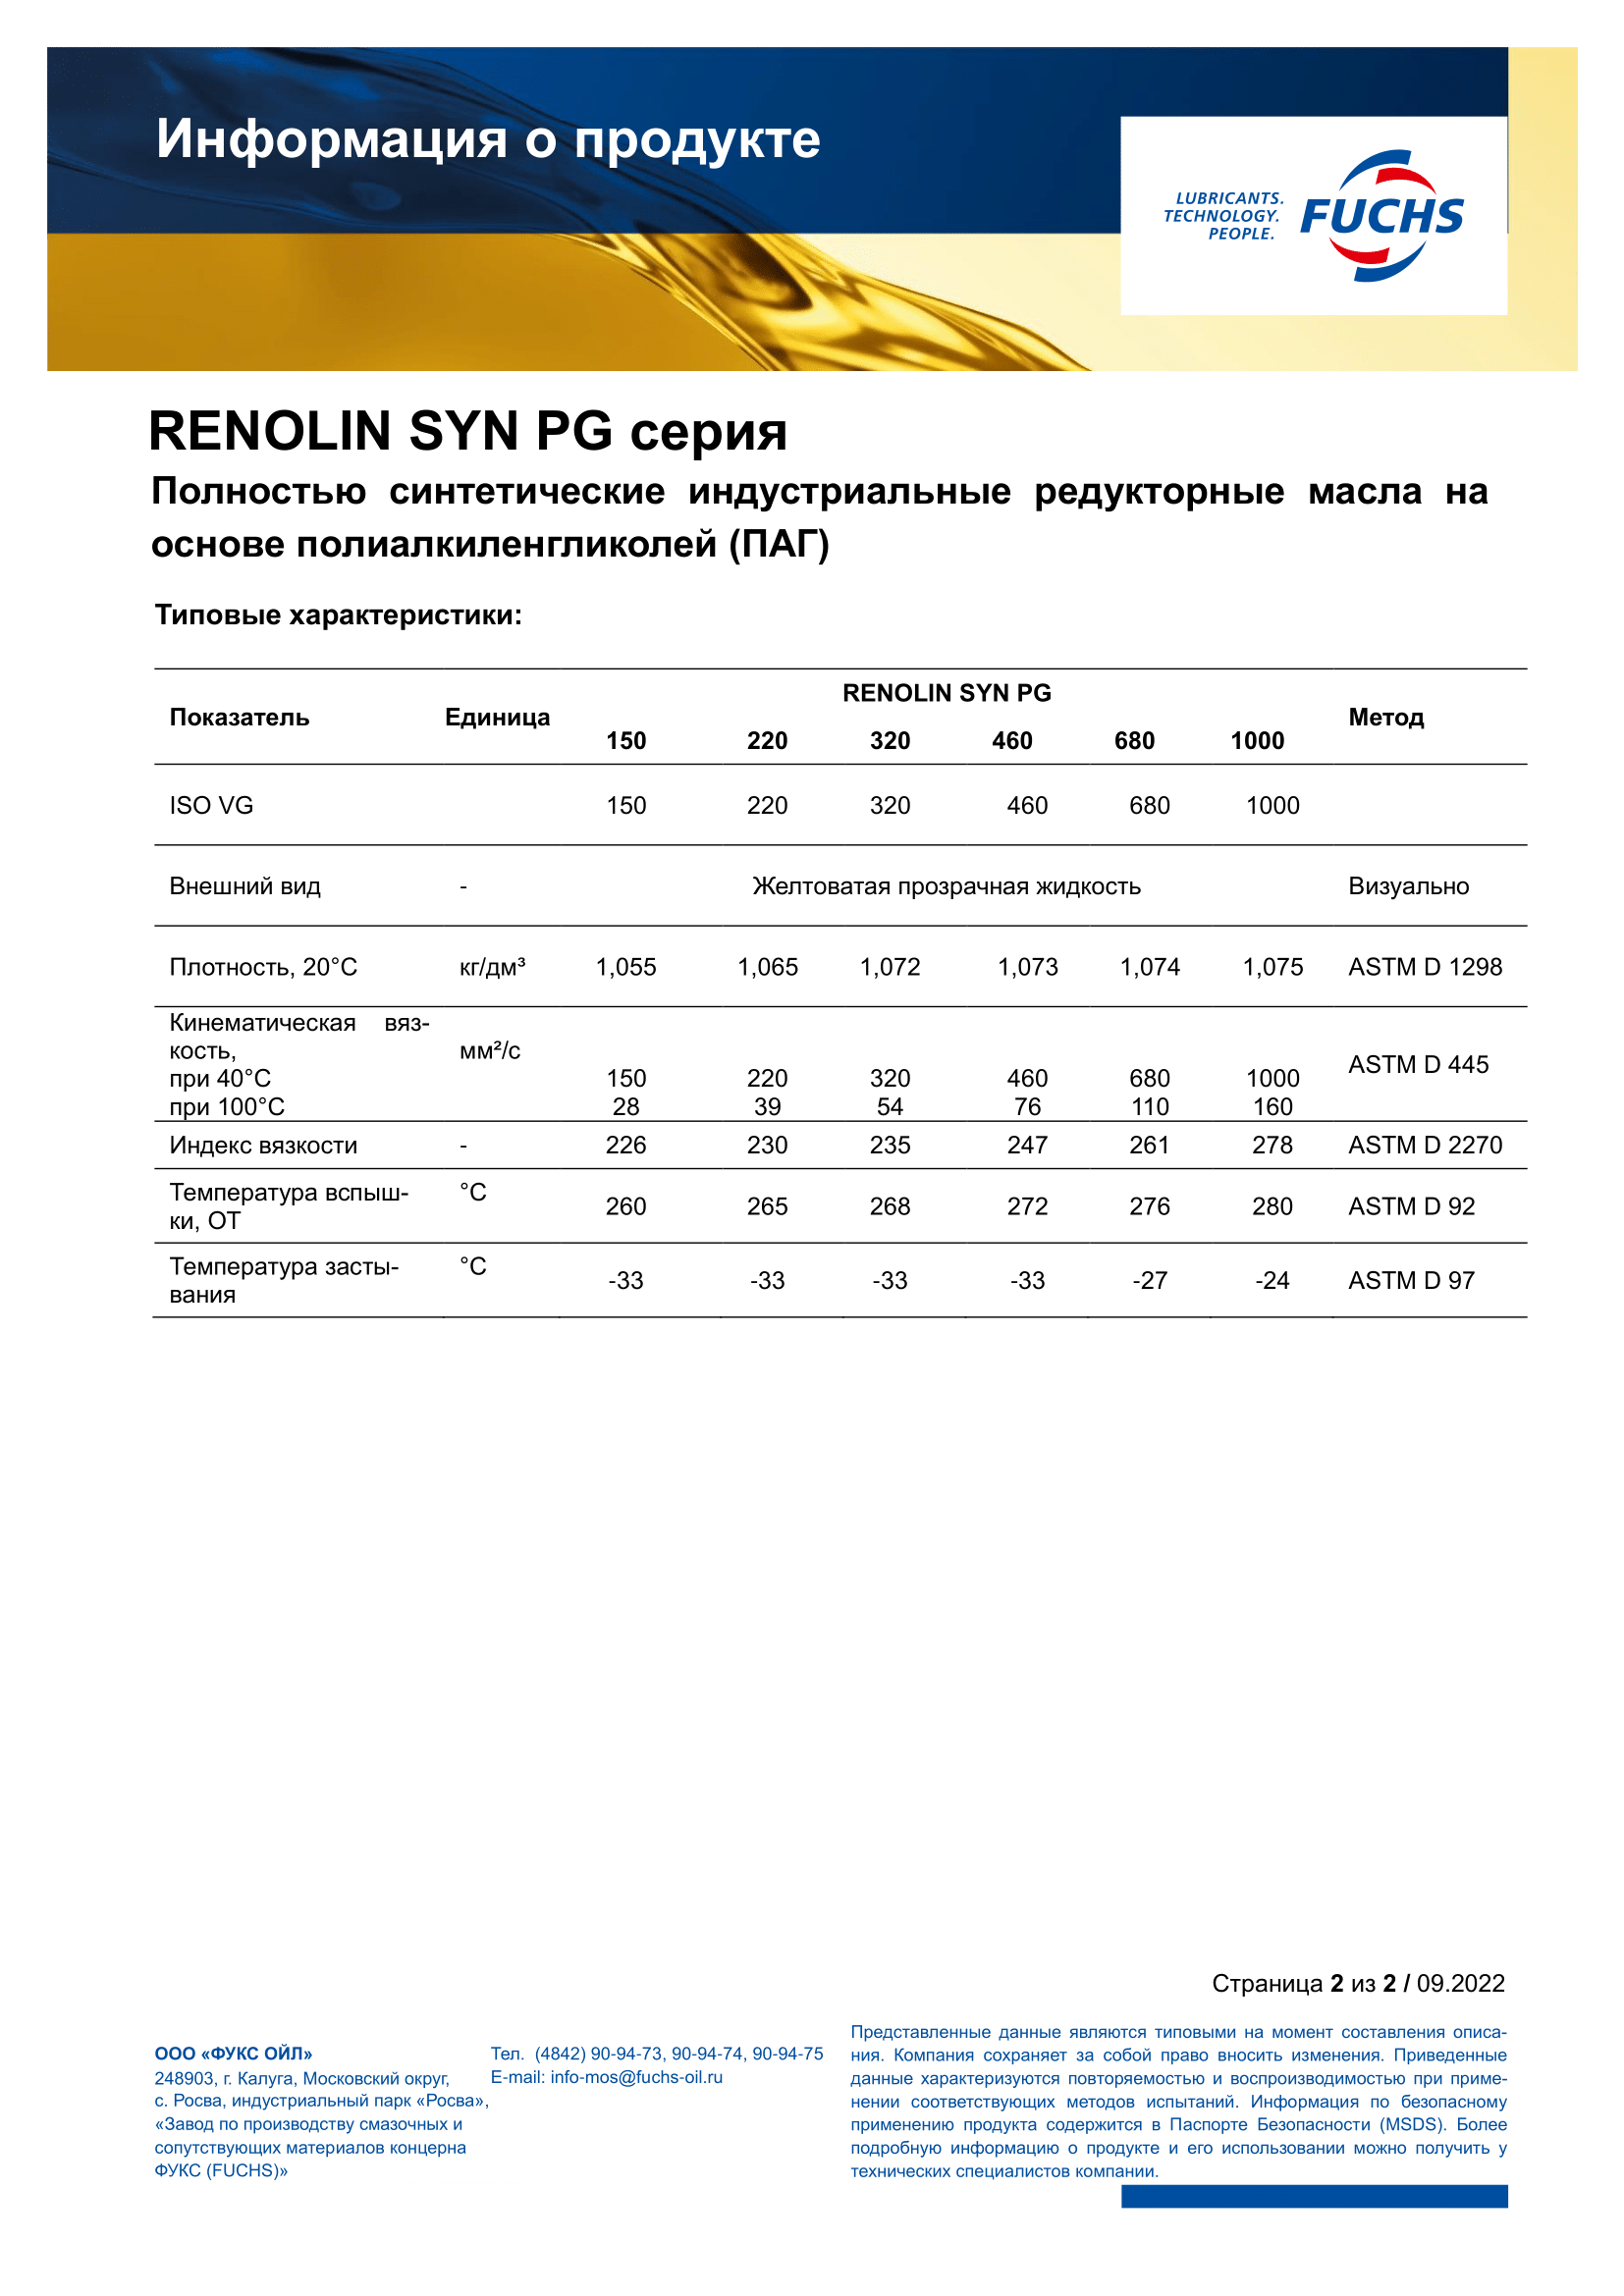 RENOLIN SYN PG 680